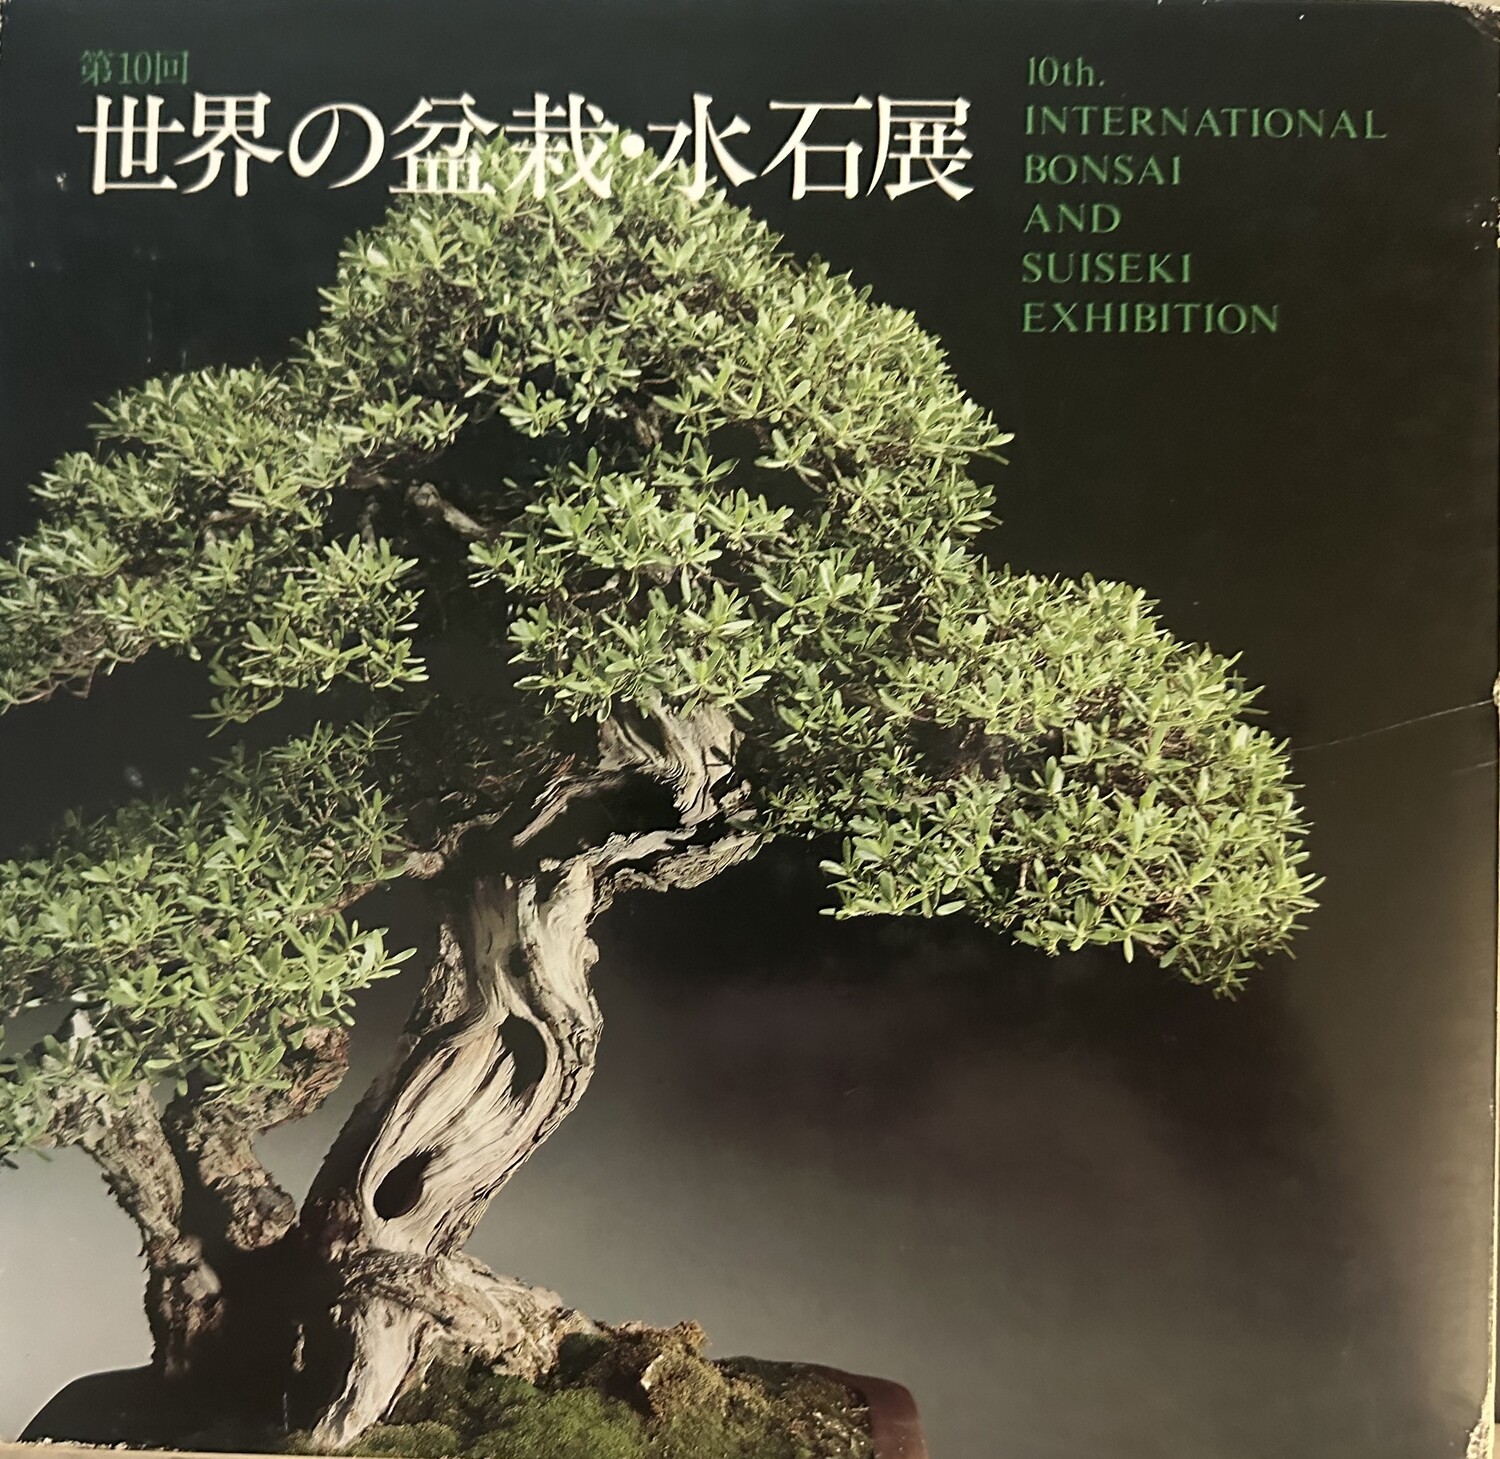 10th International Bonsai and Suiseki Exhibition